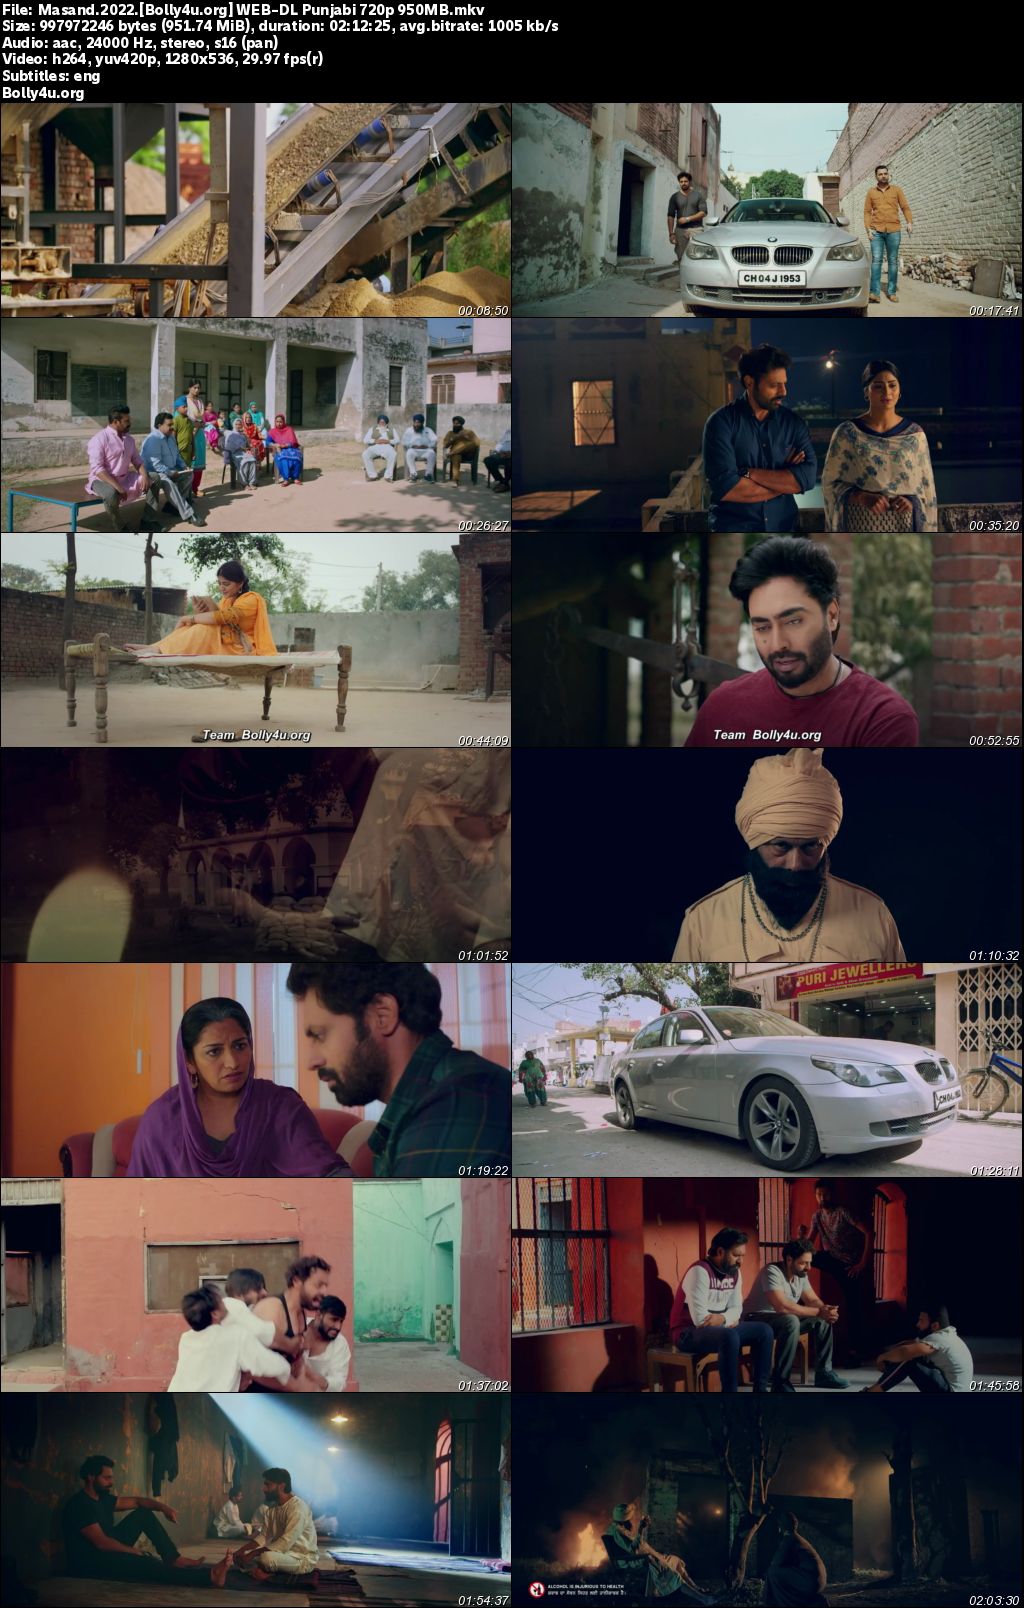 Masand 2022 WEB-DL Punjabi Full Movie Download 1080p 720p 480p